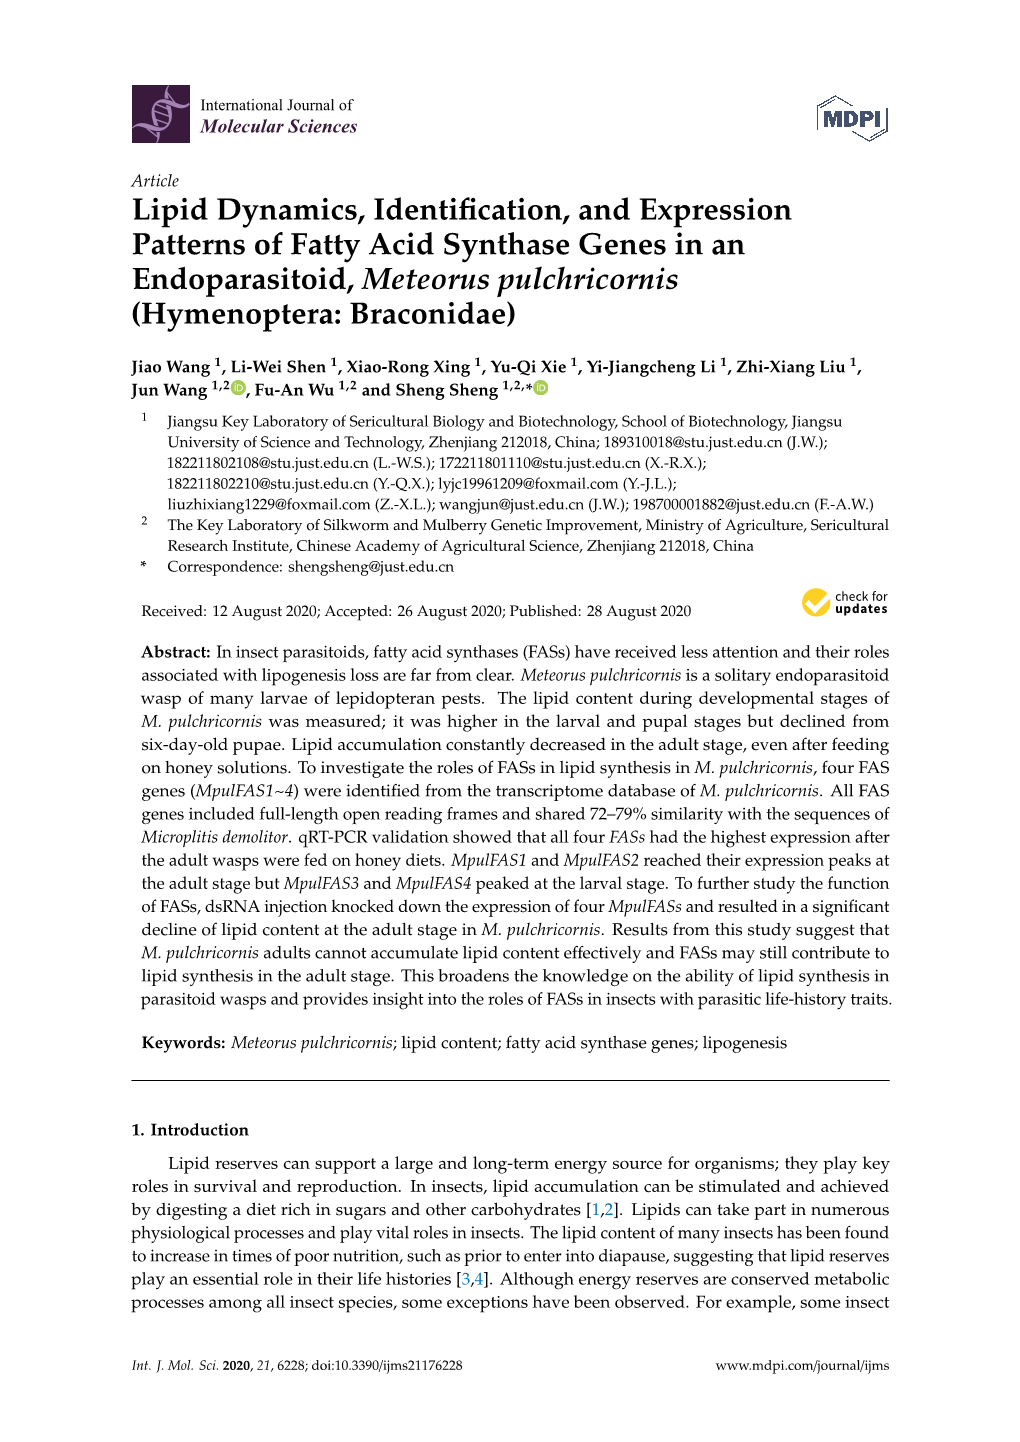 Lipid Dynamics, Identification, and Expression Patterns of Fatty Acid